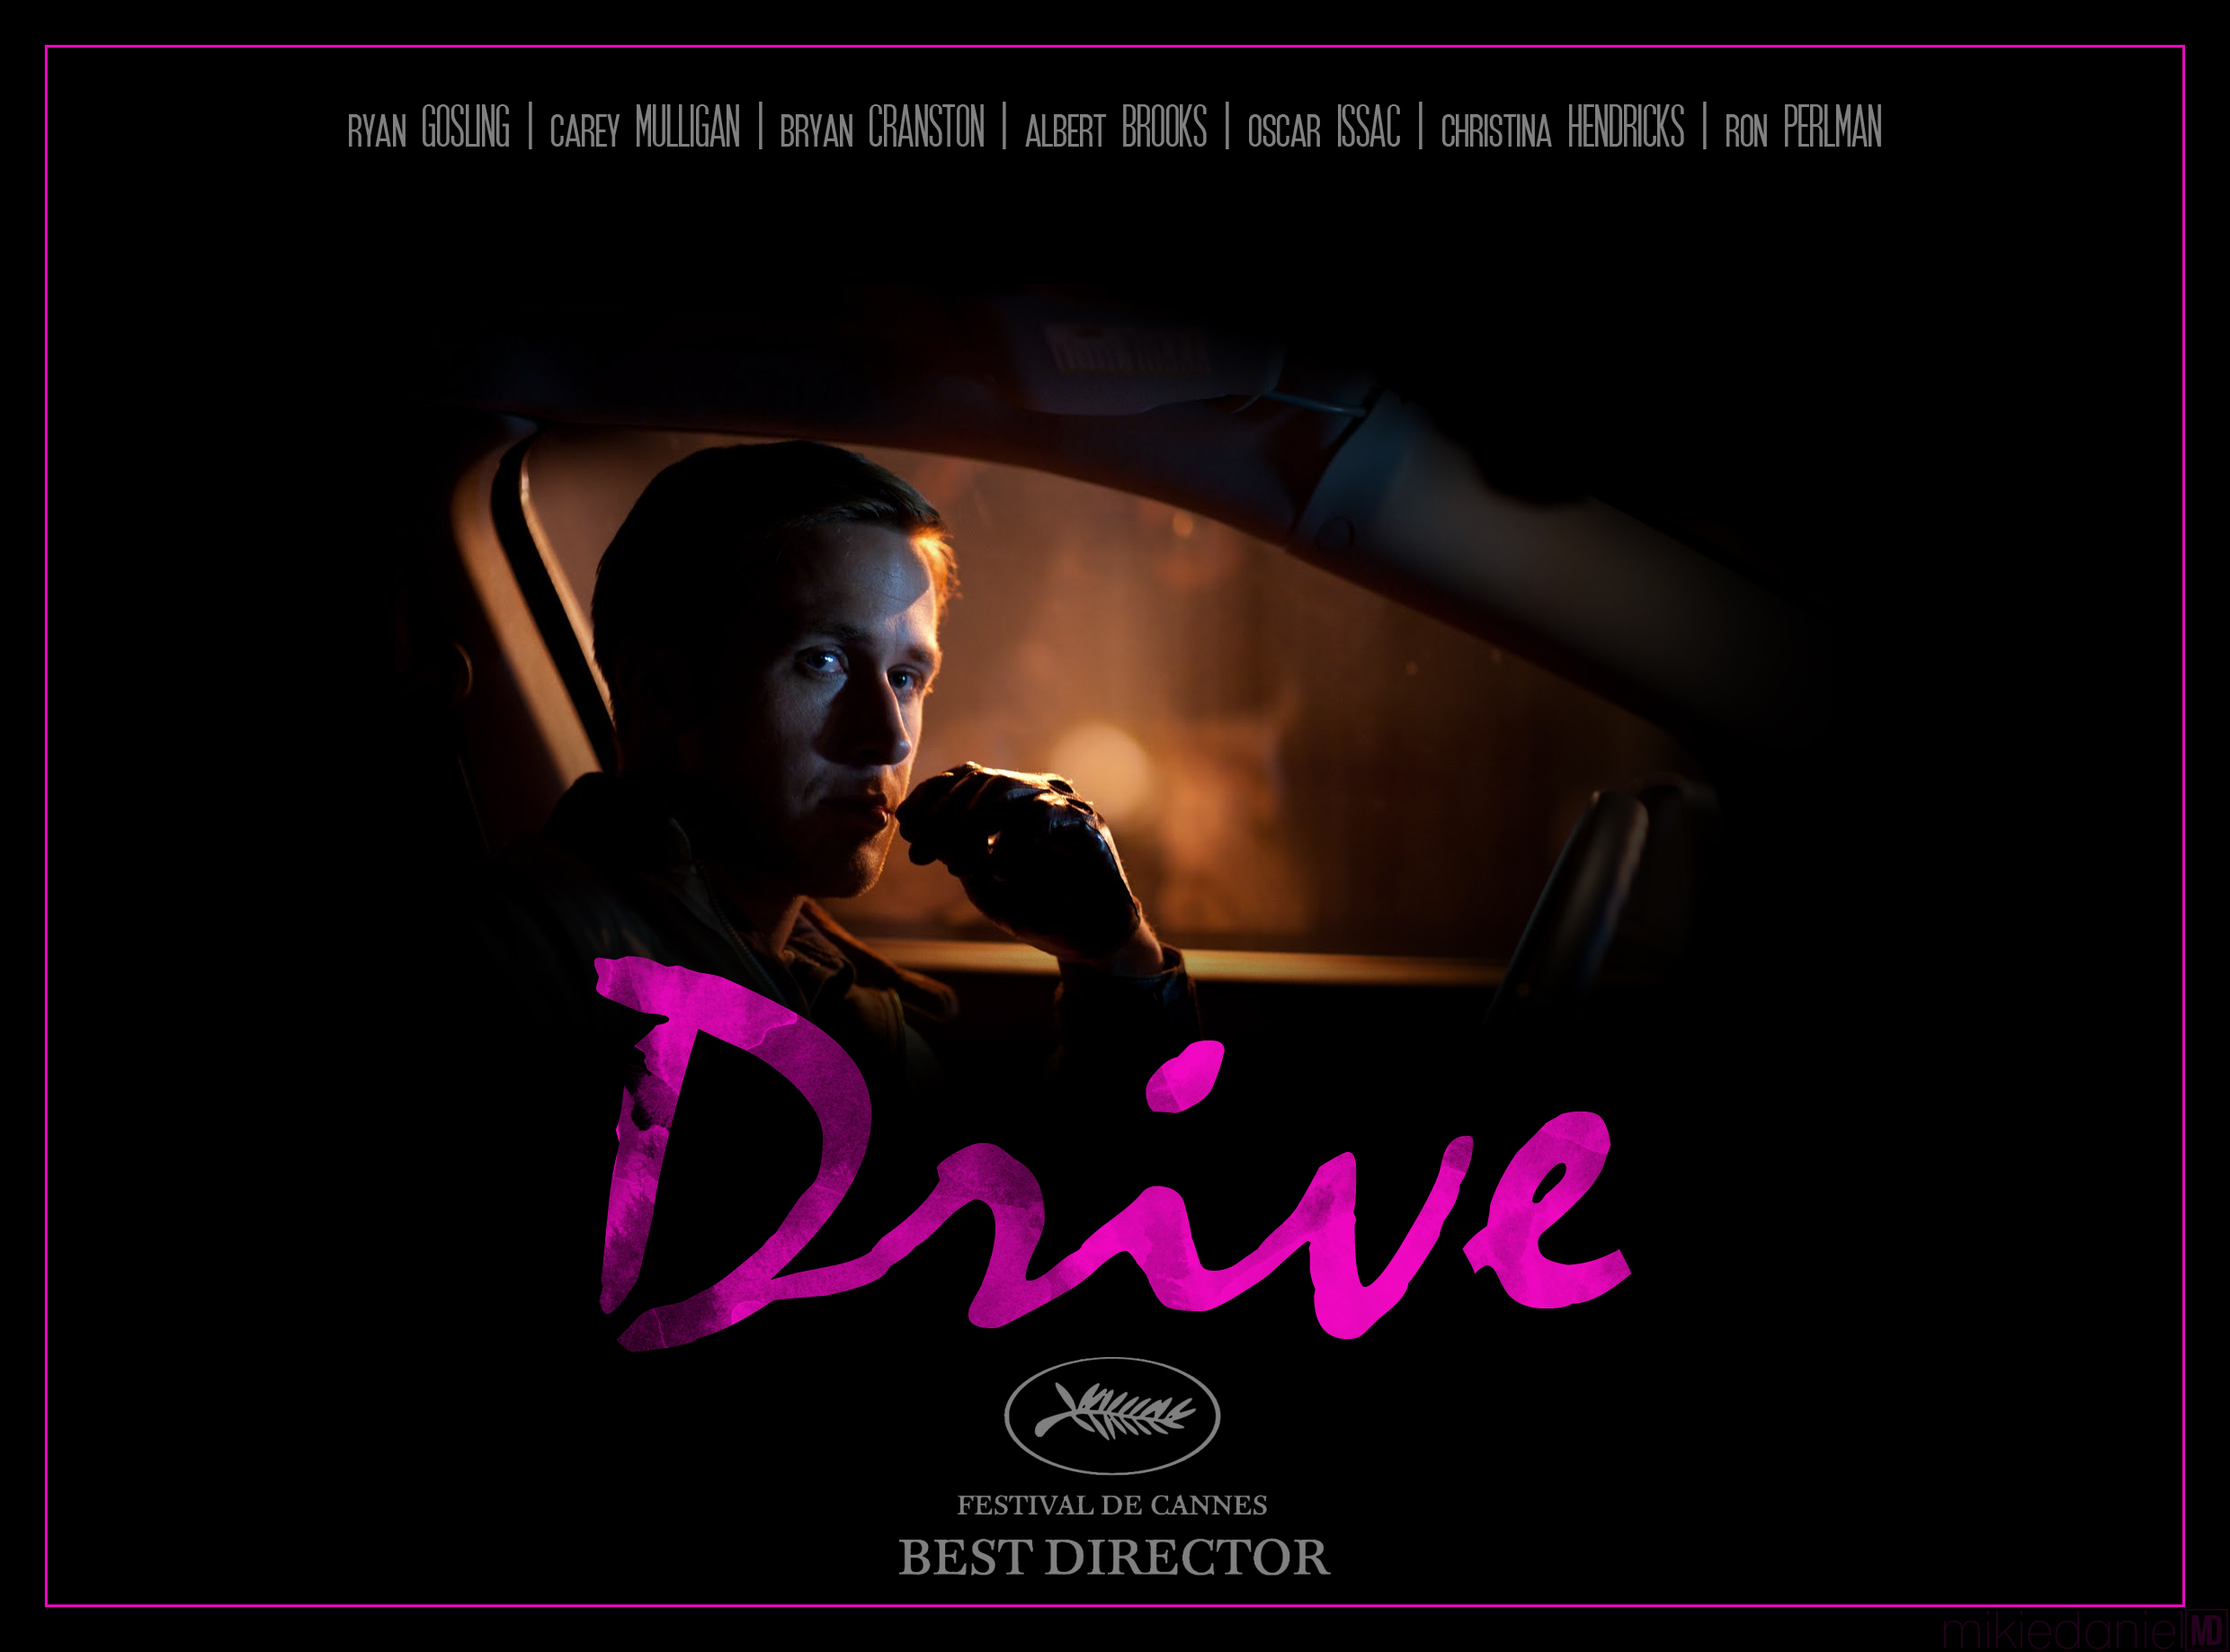 drive 2